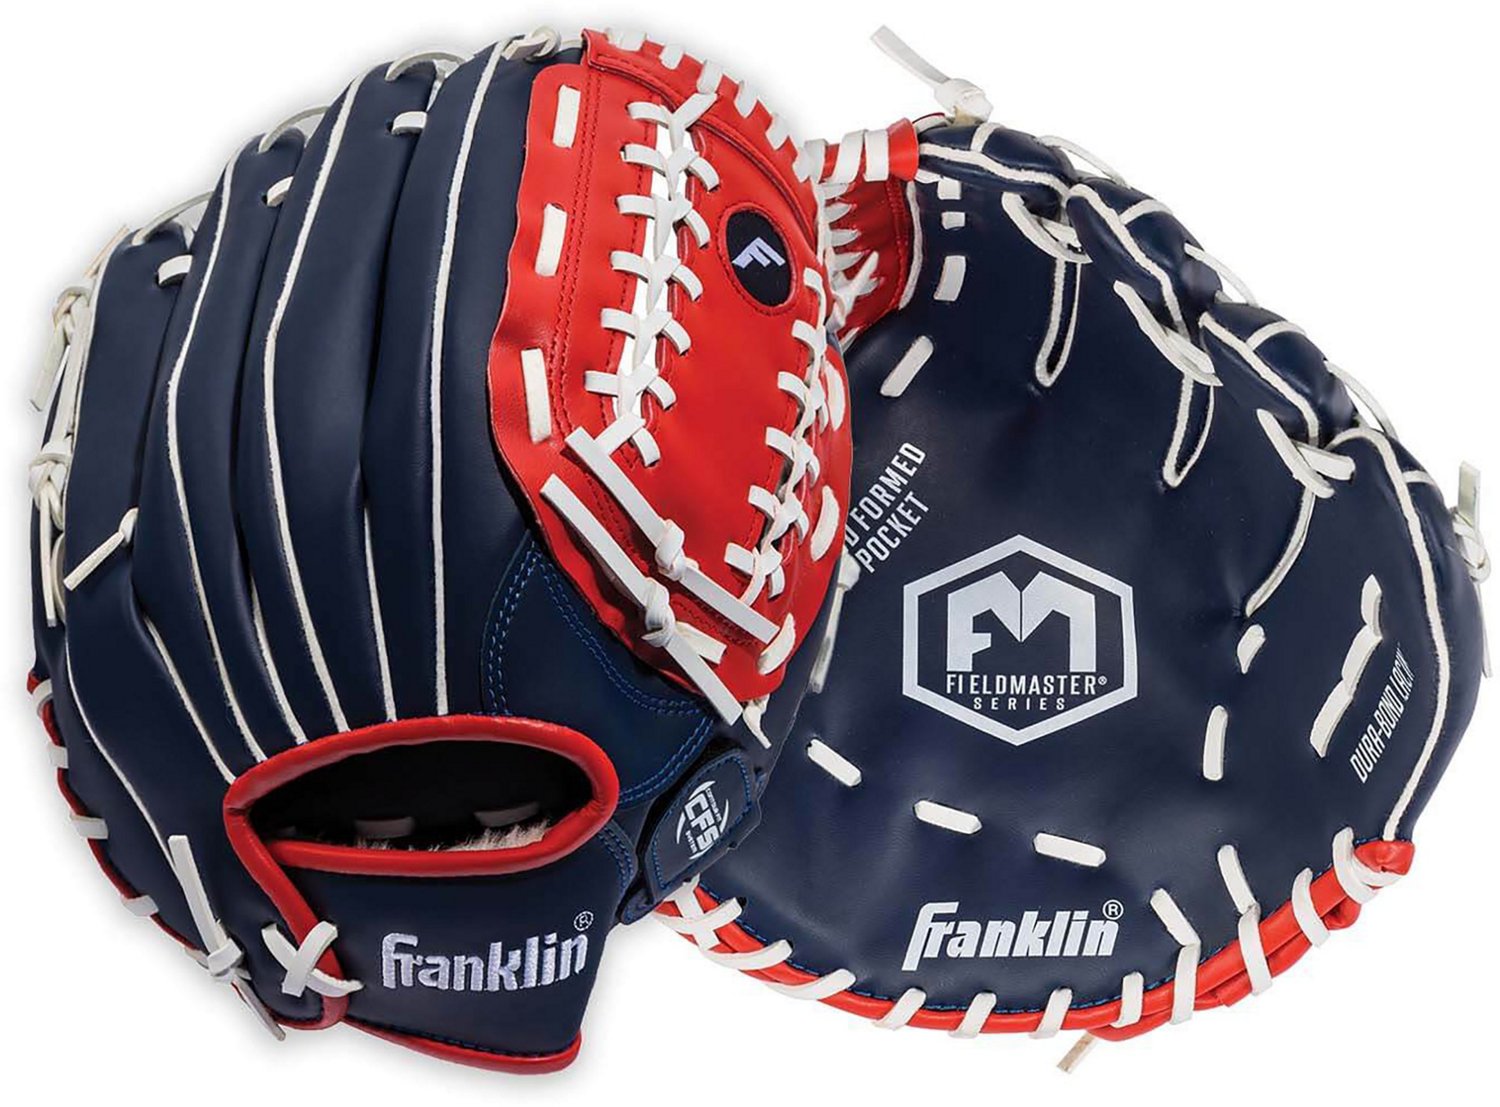 Franklin Field Master USA Series Baseball Glove